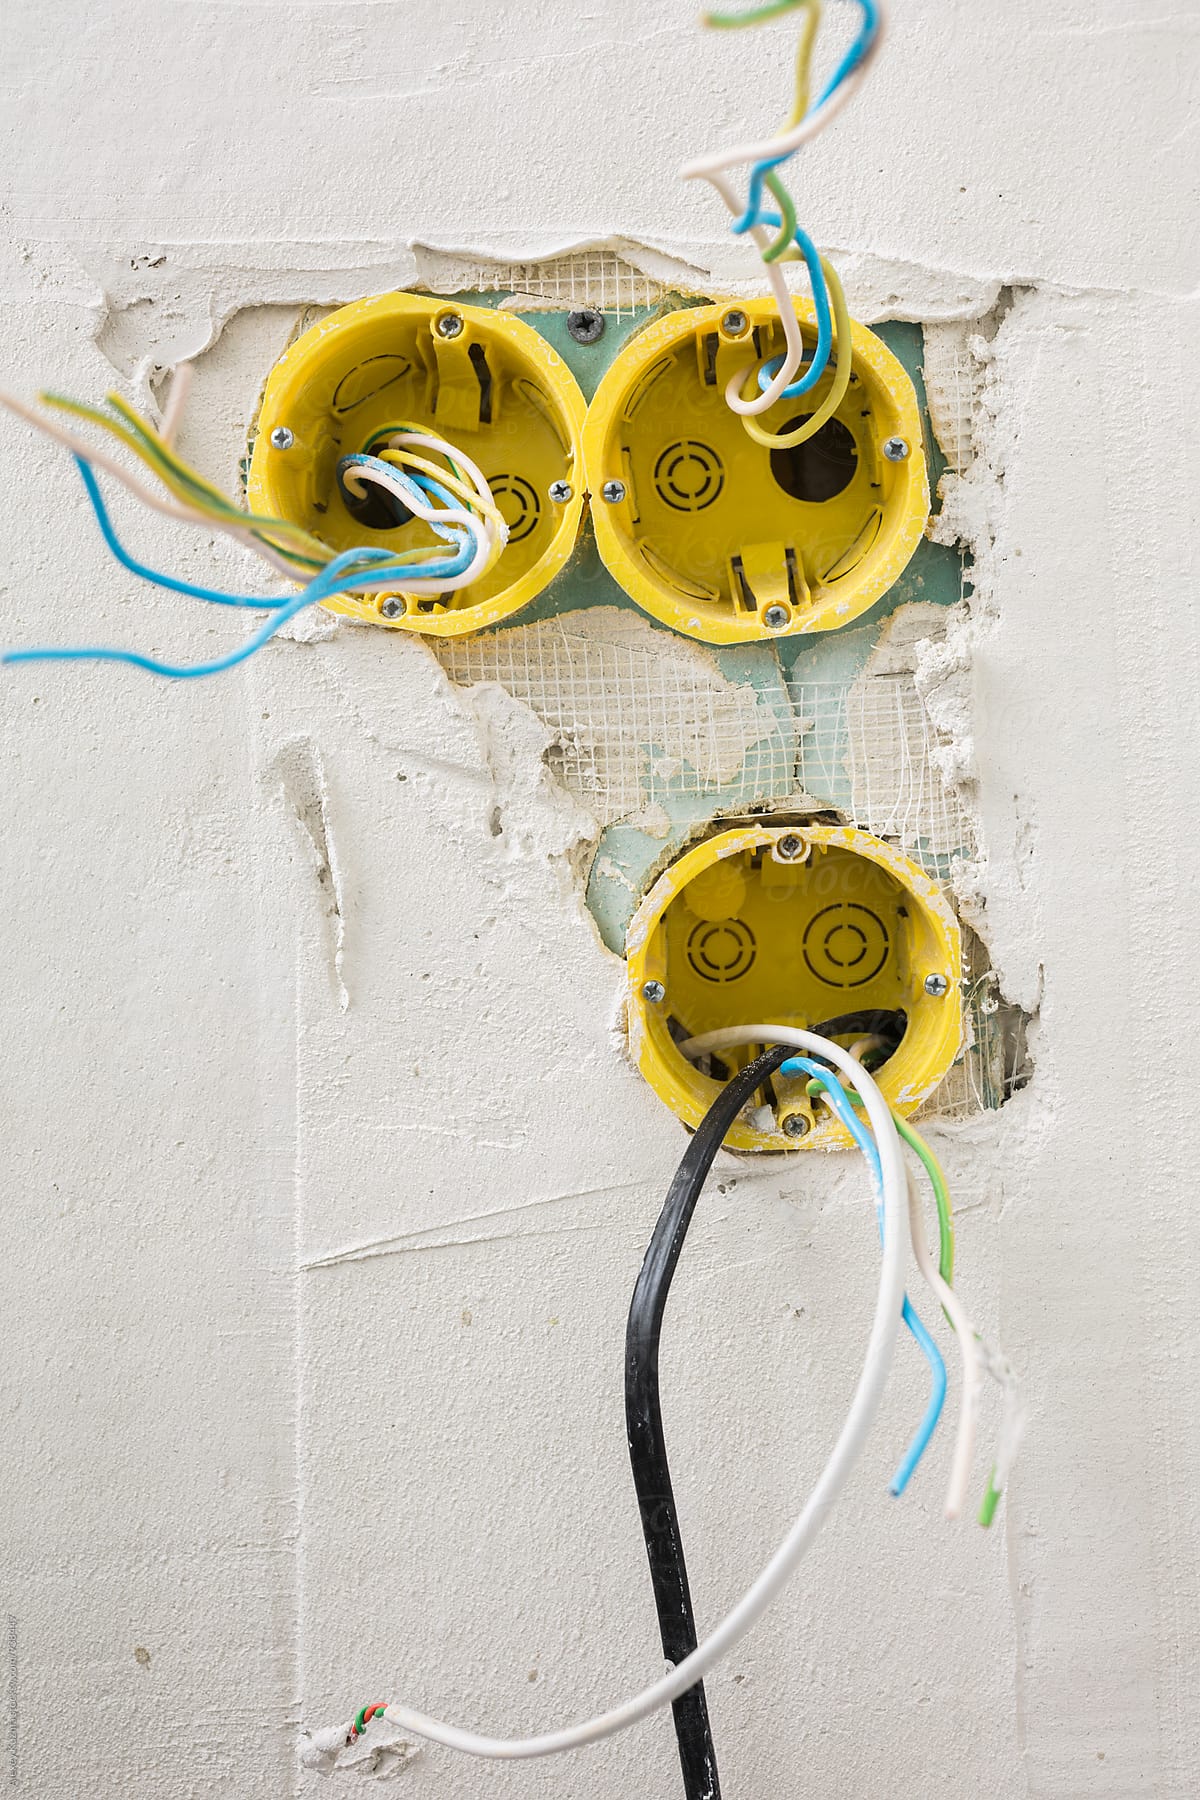 yellow power socket under construction